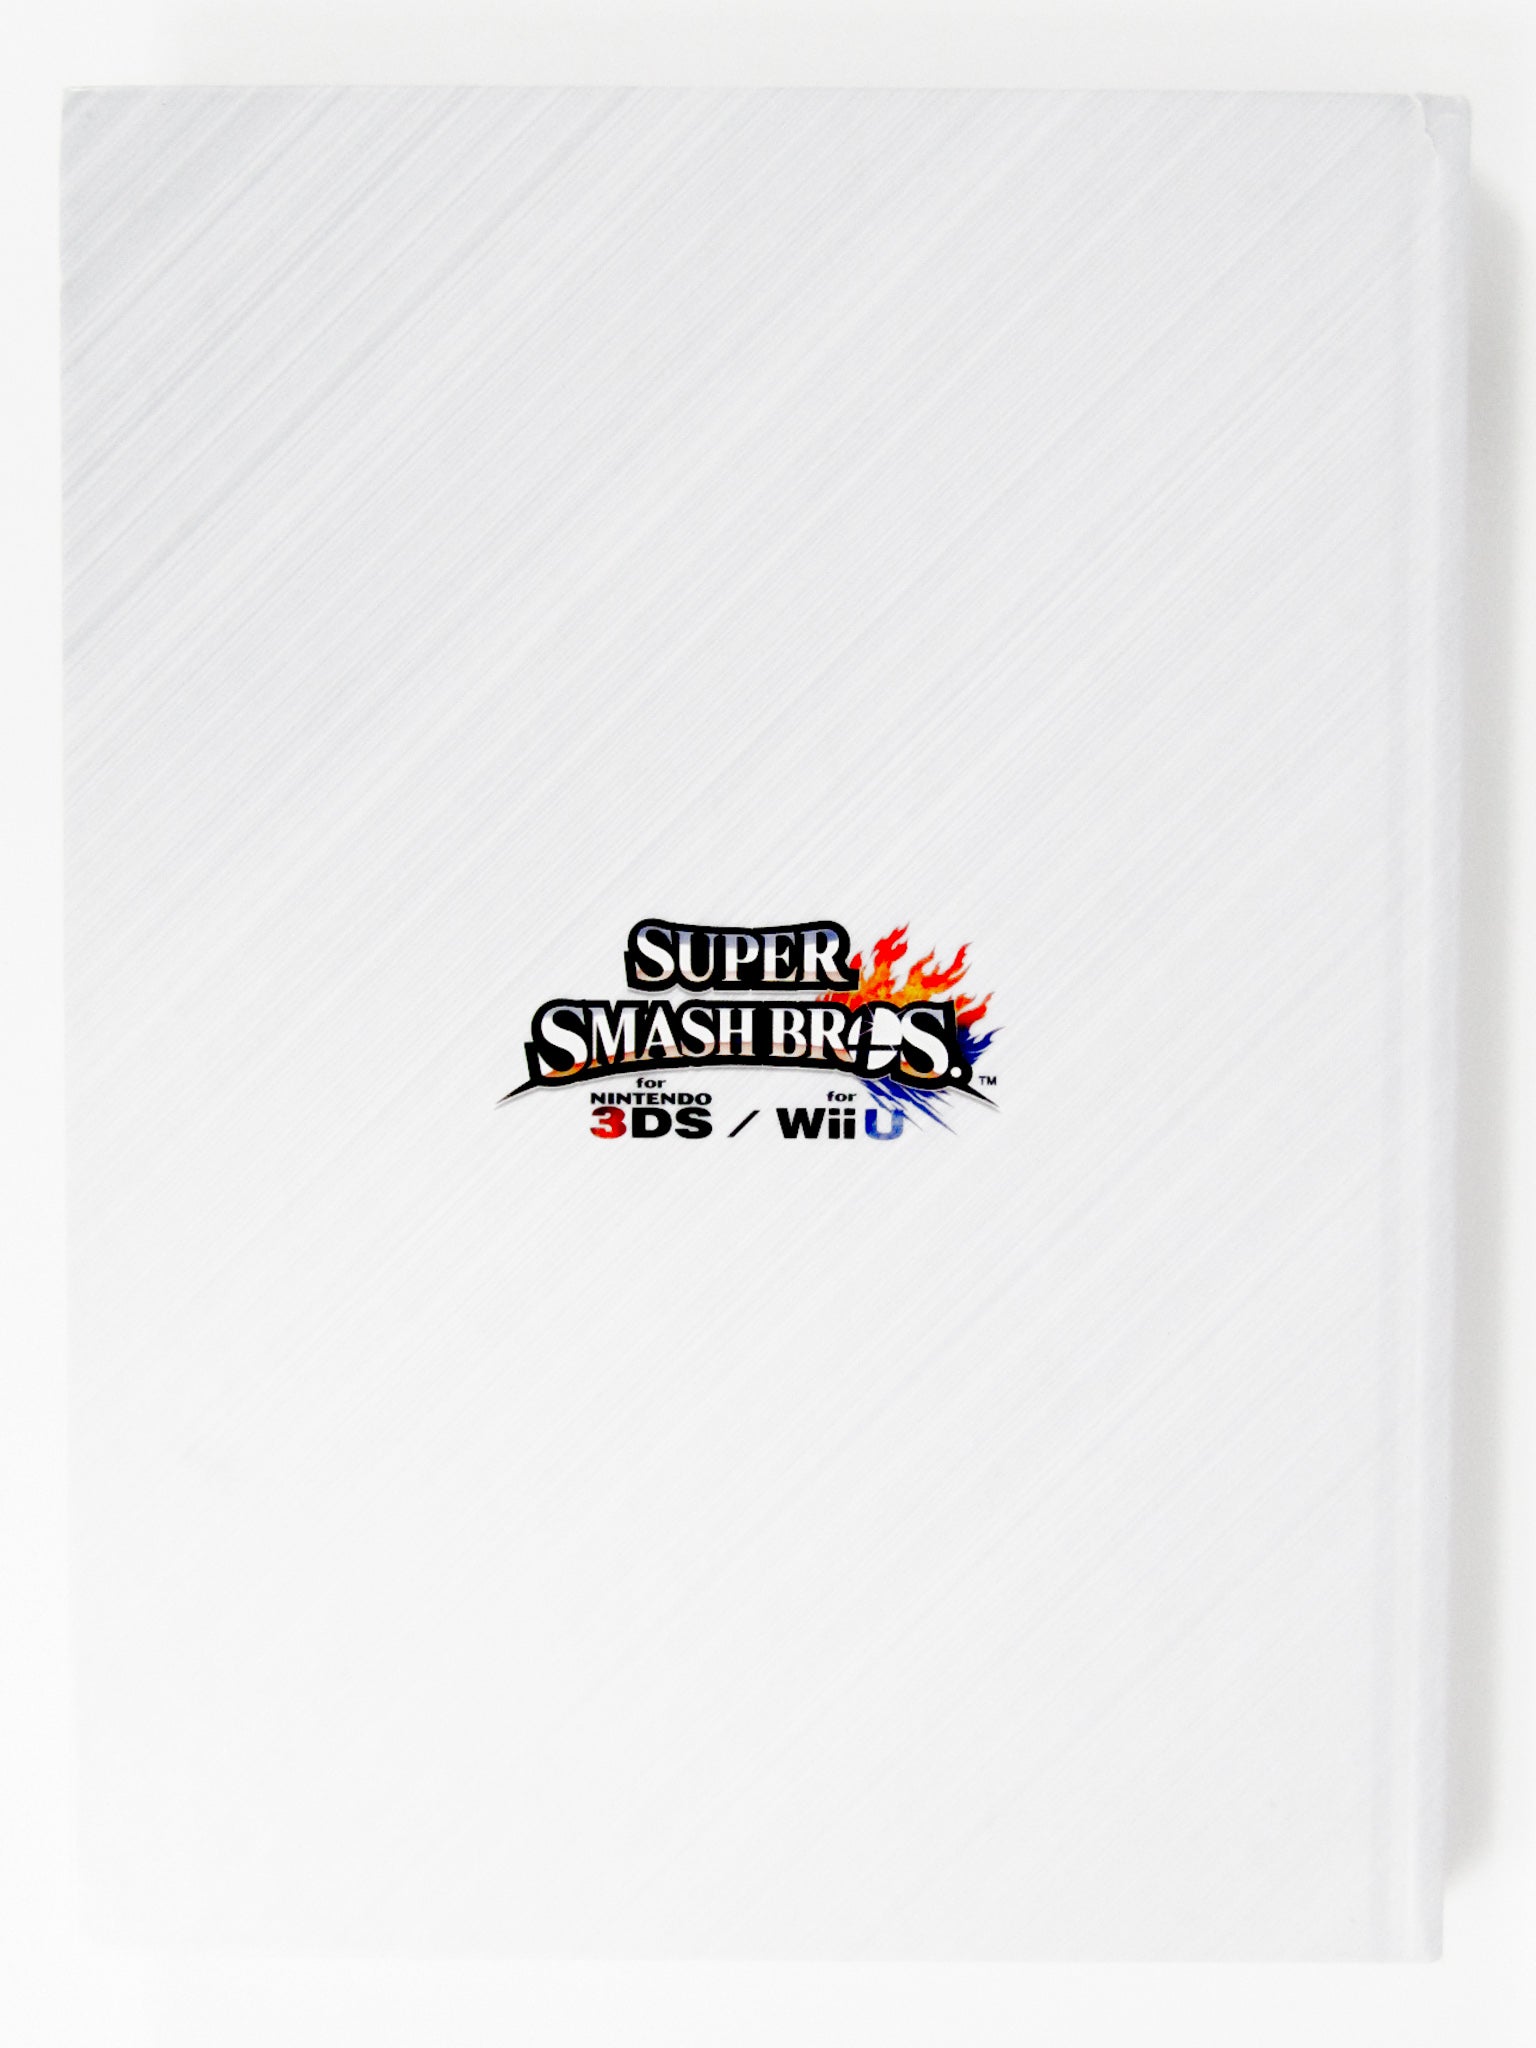 Super Smash Bros Ultimate (Nintendo Switch) – RetroMTL